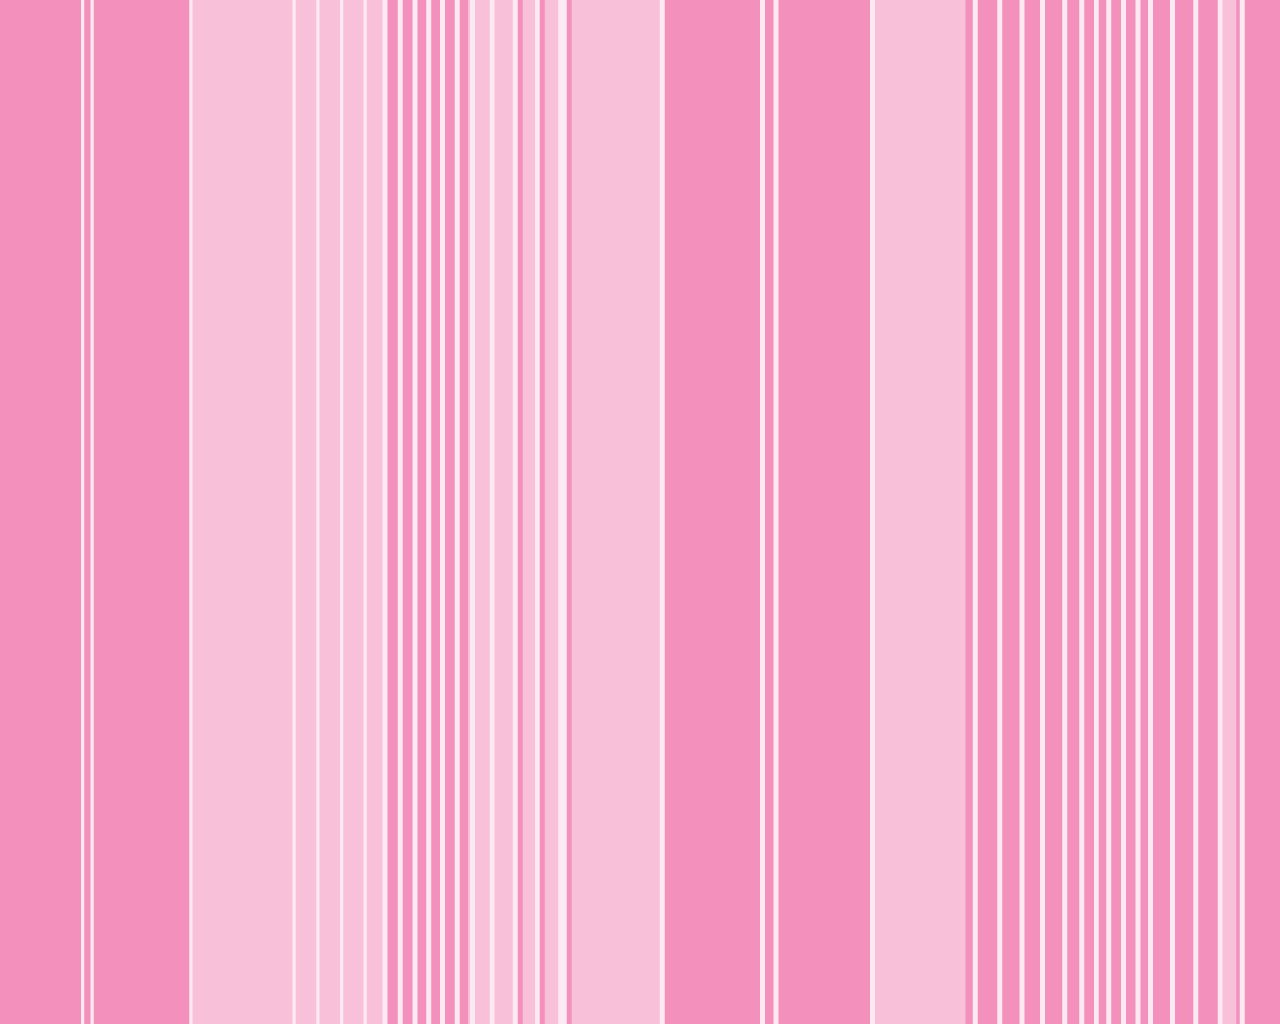  76 Wallpaper Warna Pink  Pickini